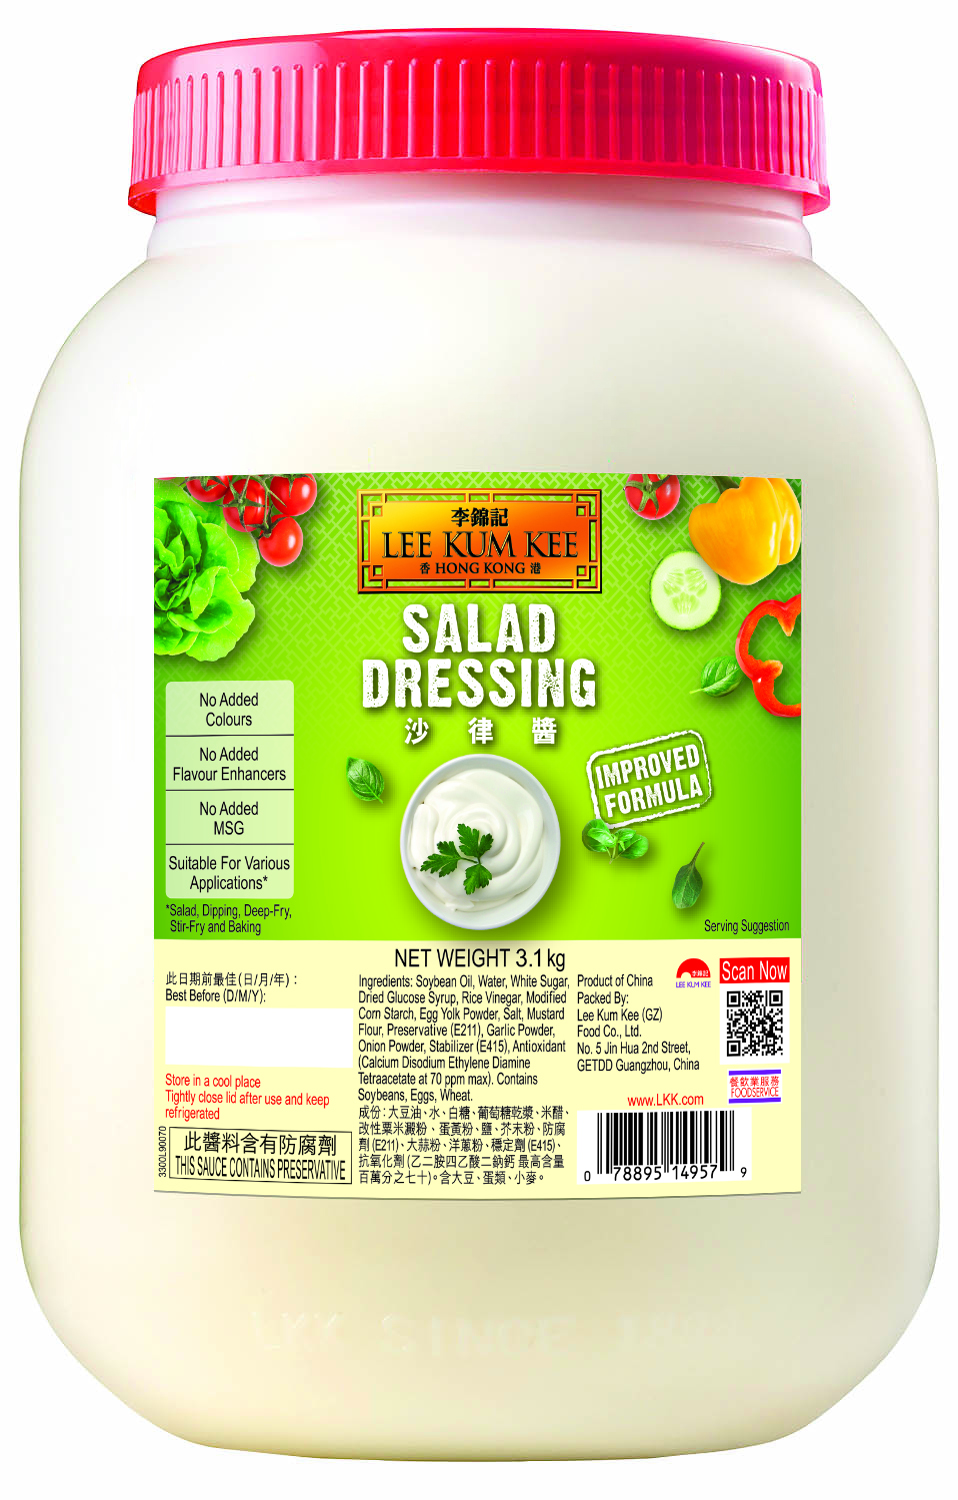 Salad dressing